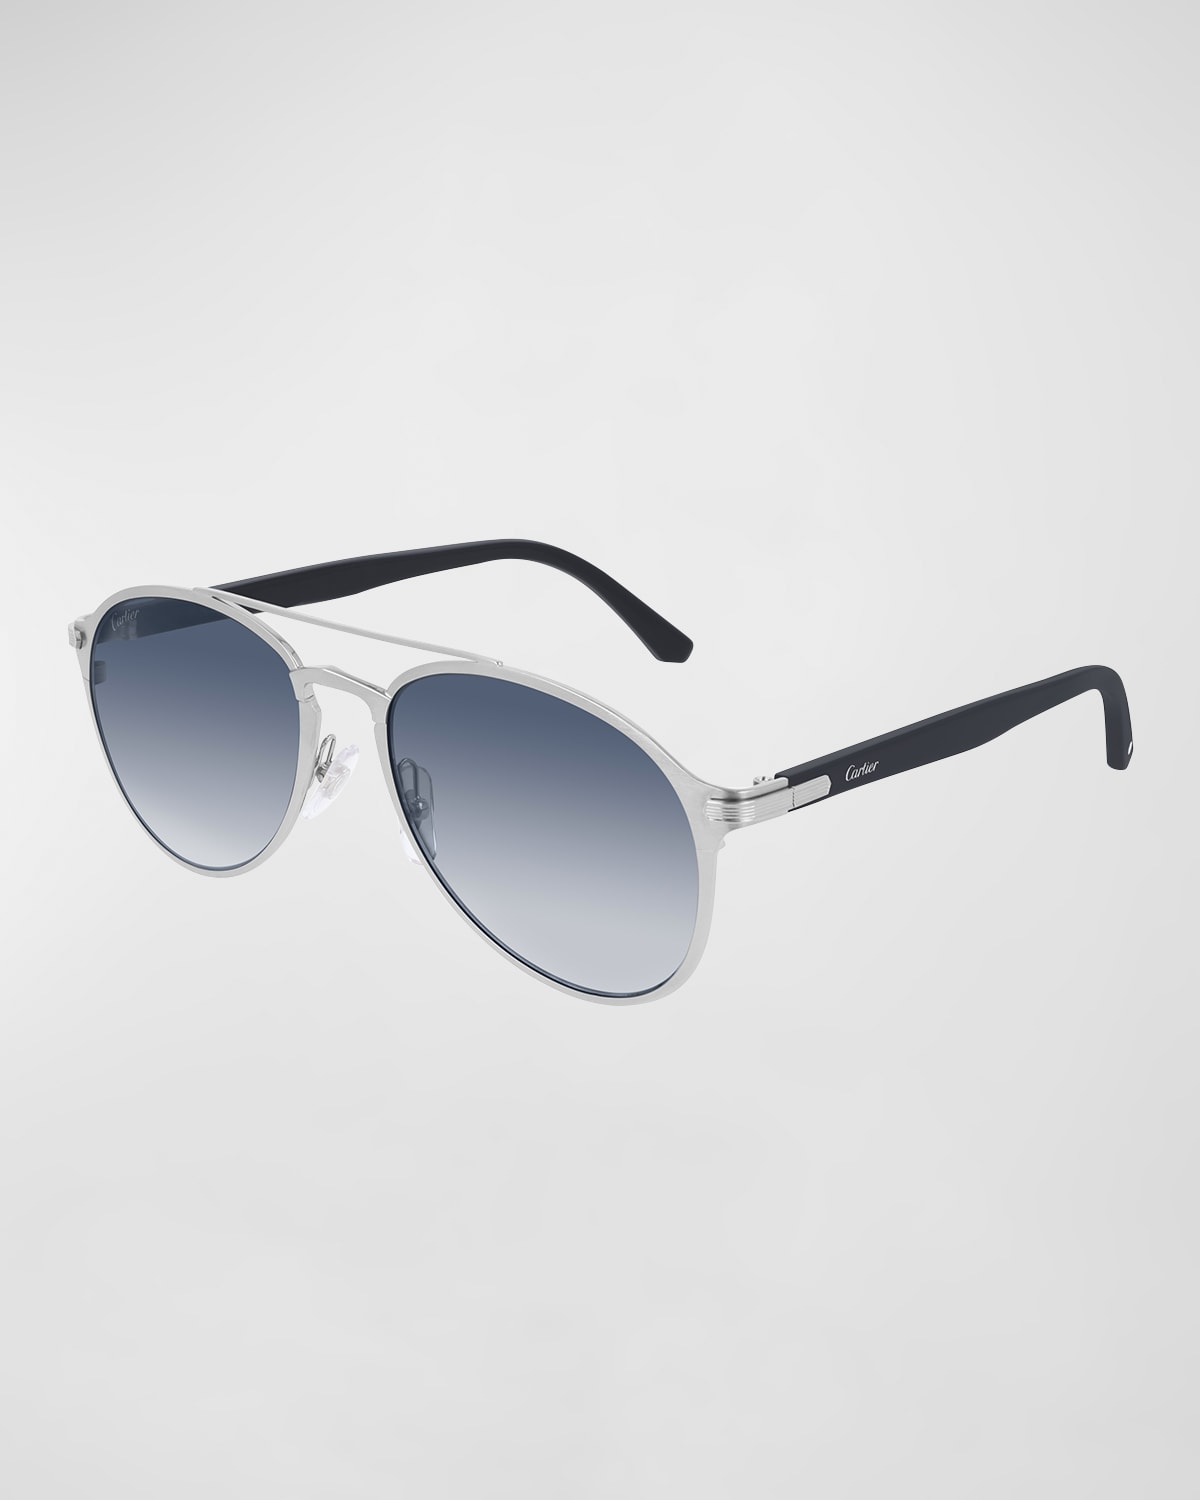 Men's Metal Double-Bridge Aviator Sunglasses